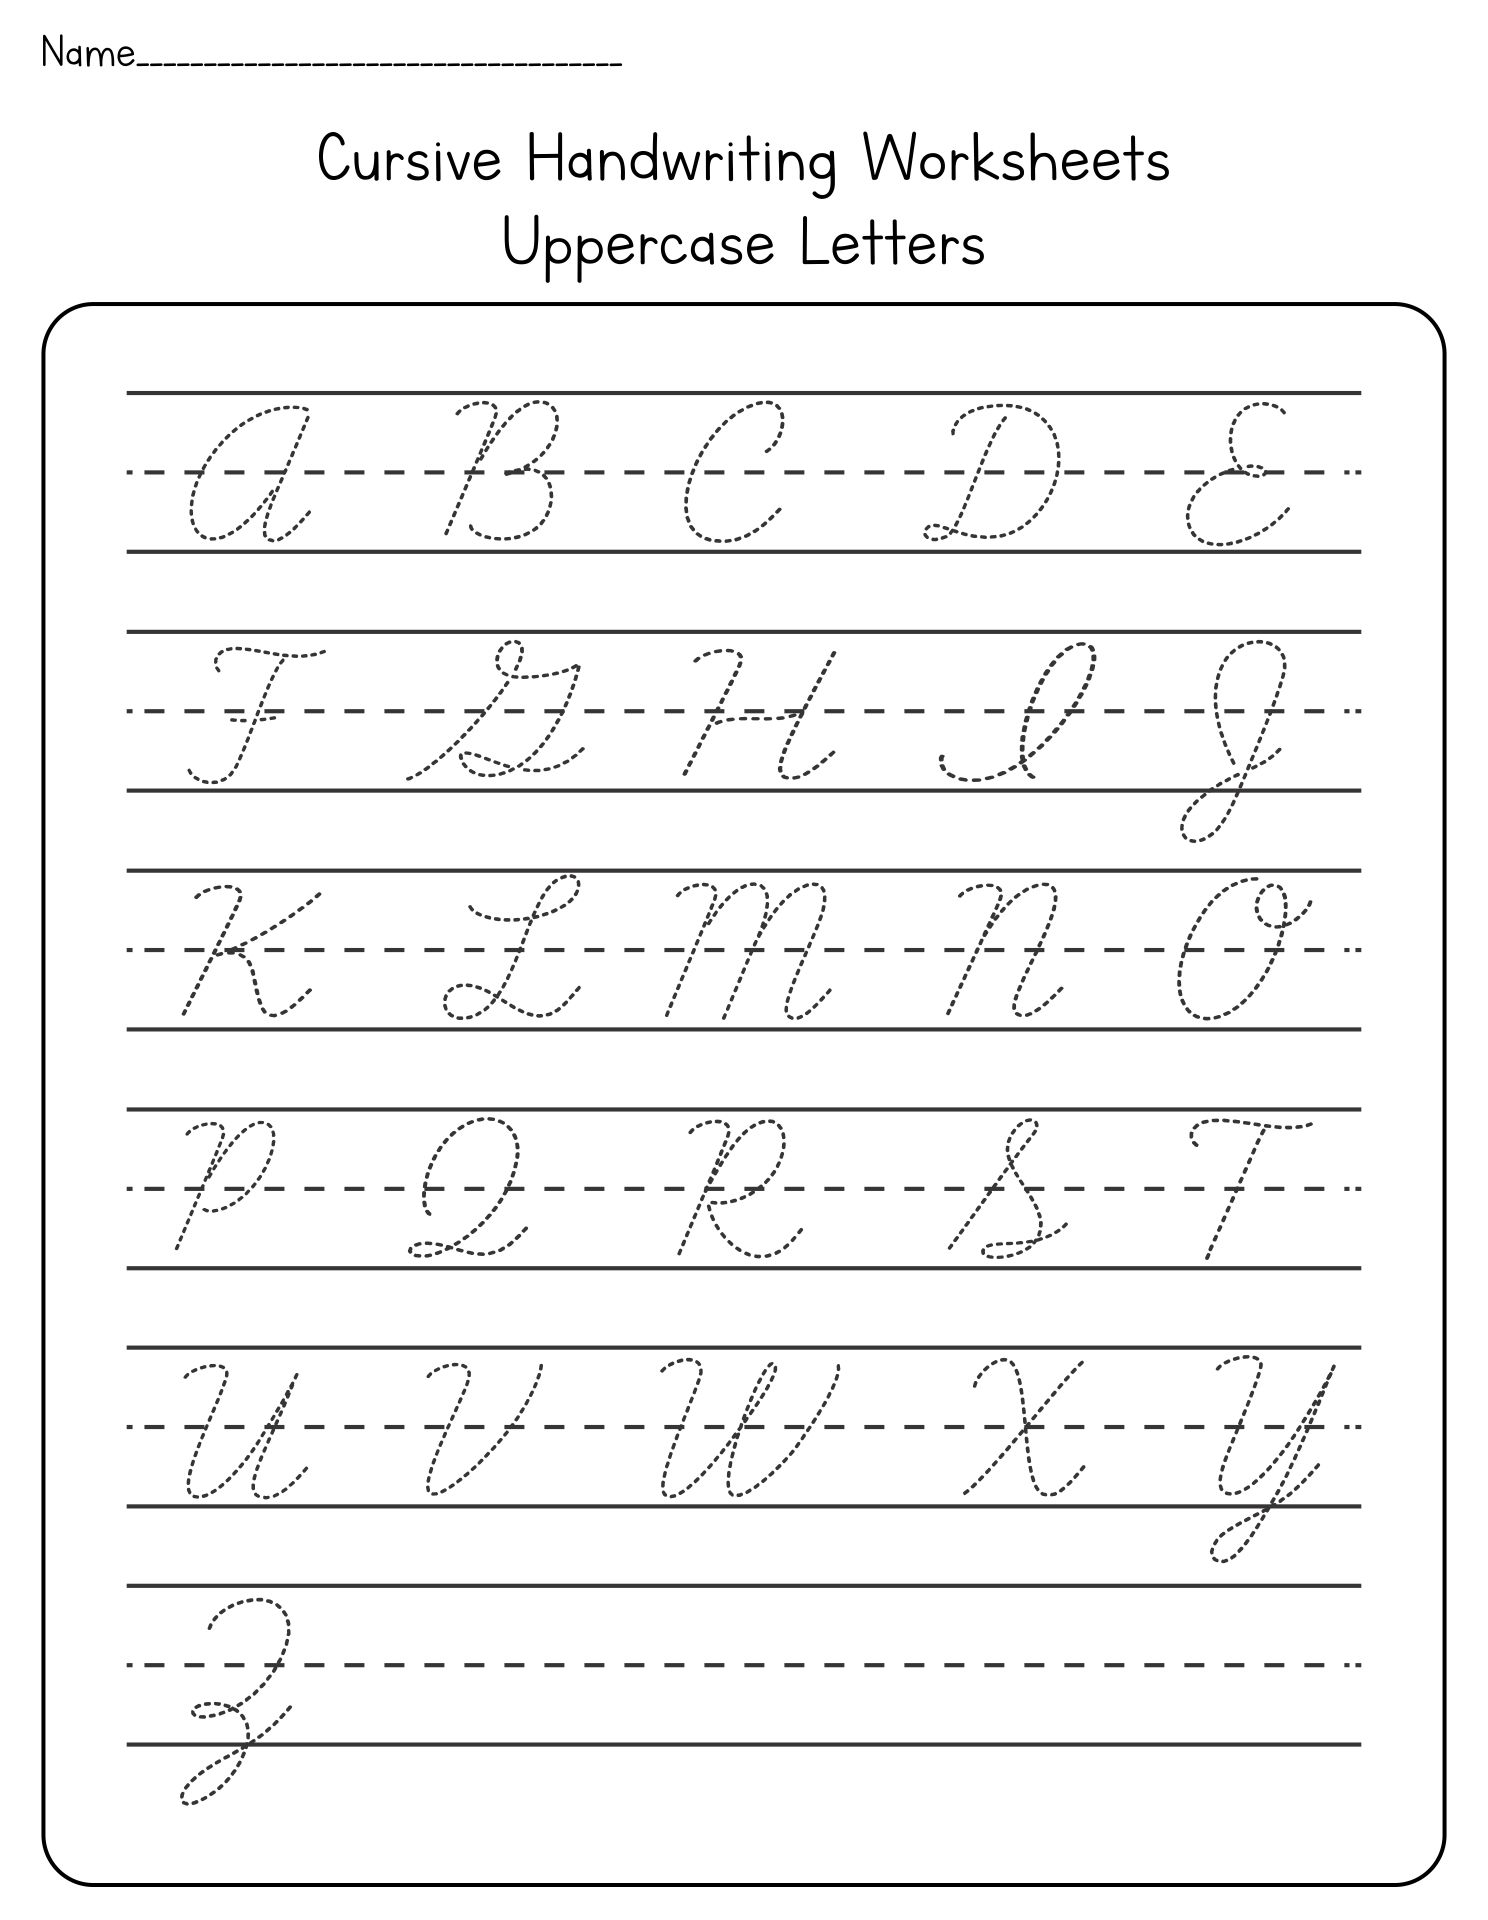 cursive-handwriting-worksheets-free-printable